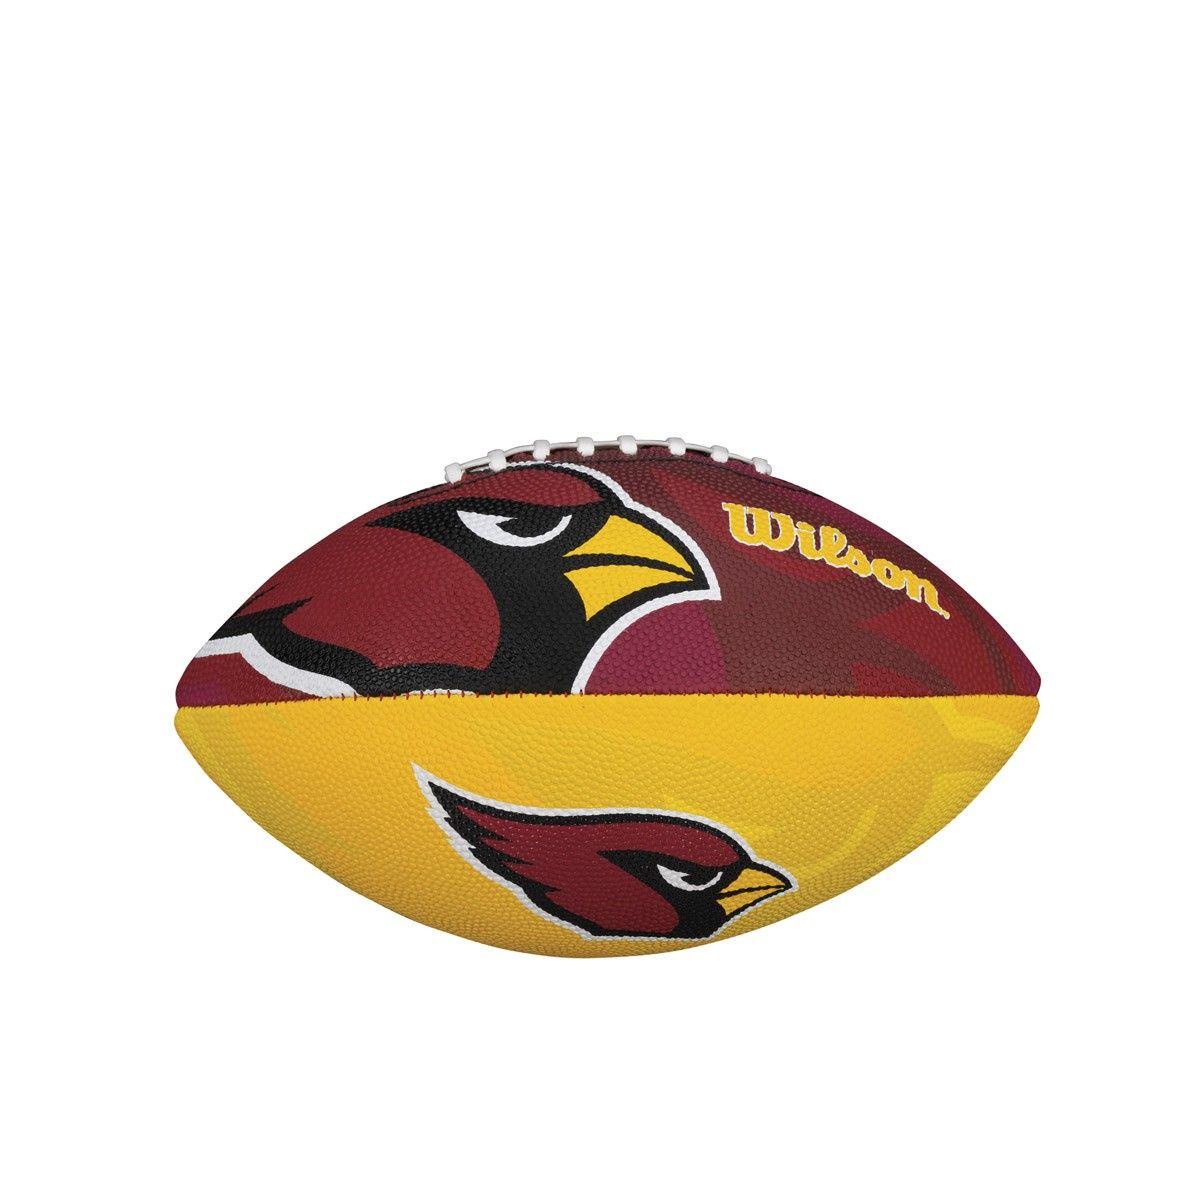 Arizona Football Team Logo - NFL TEAM LOGO JUNIOR SIZE FOOTBALL - ARIZONA CARDINALS | Wilson ...